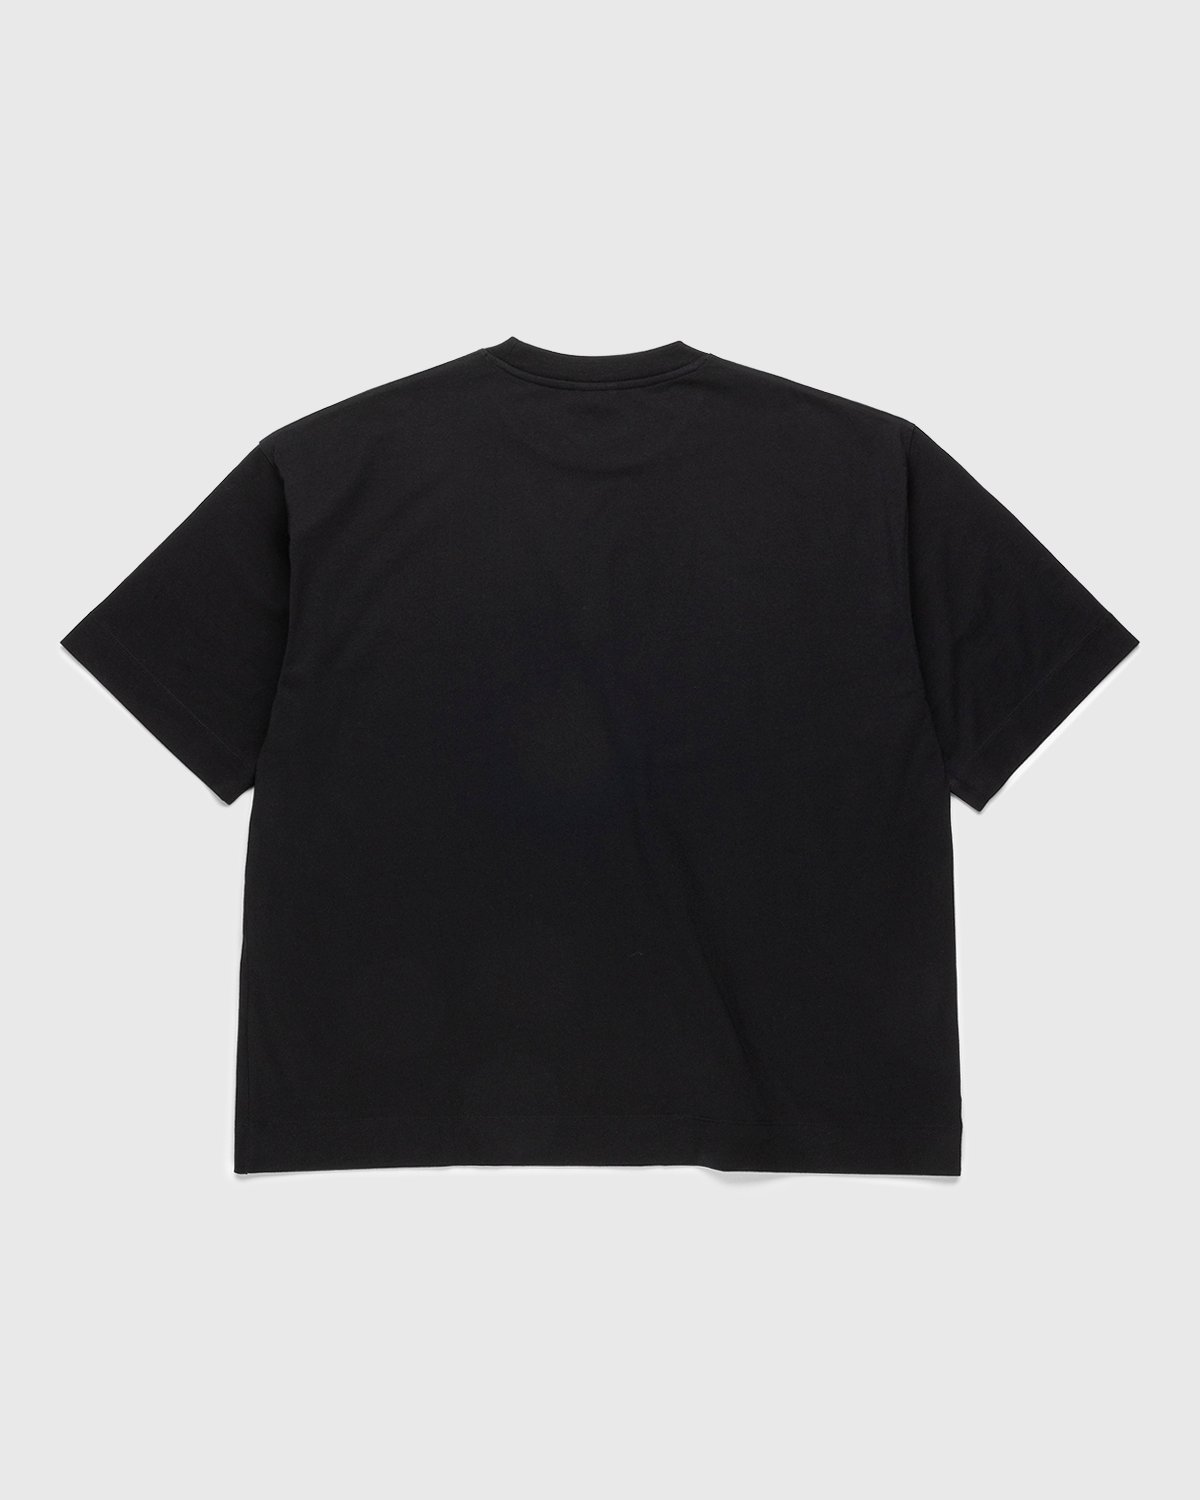 Dries van Noten - Hen Oversized T-Shirt Black - Clothing - Black - Image 2